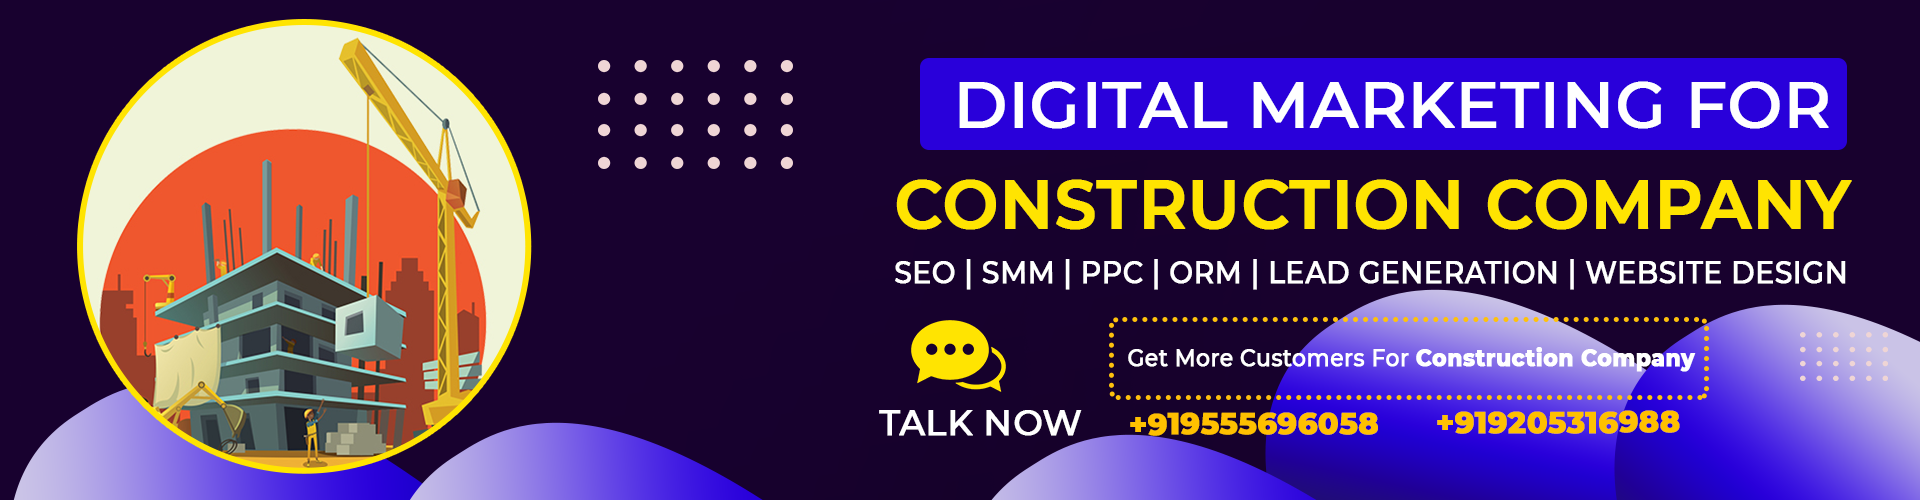 digital-marketing-for-construction-company